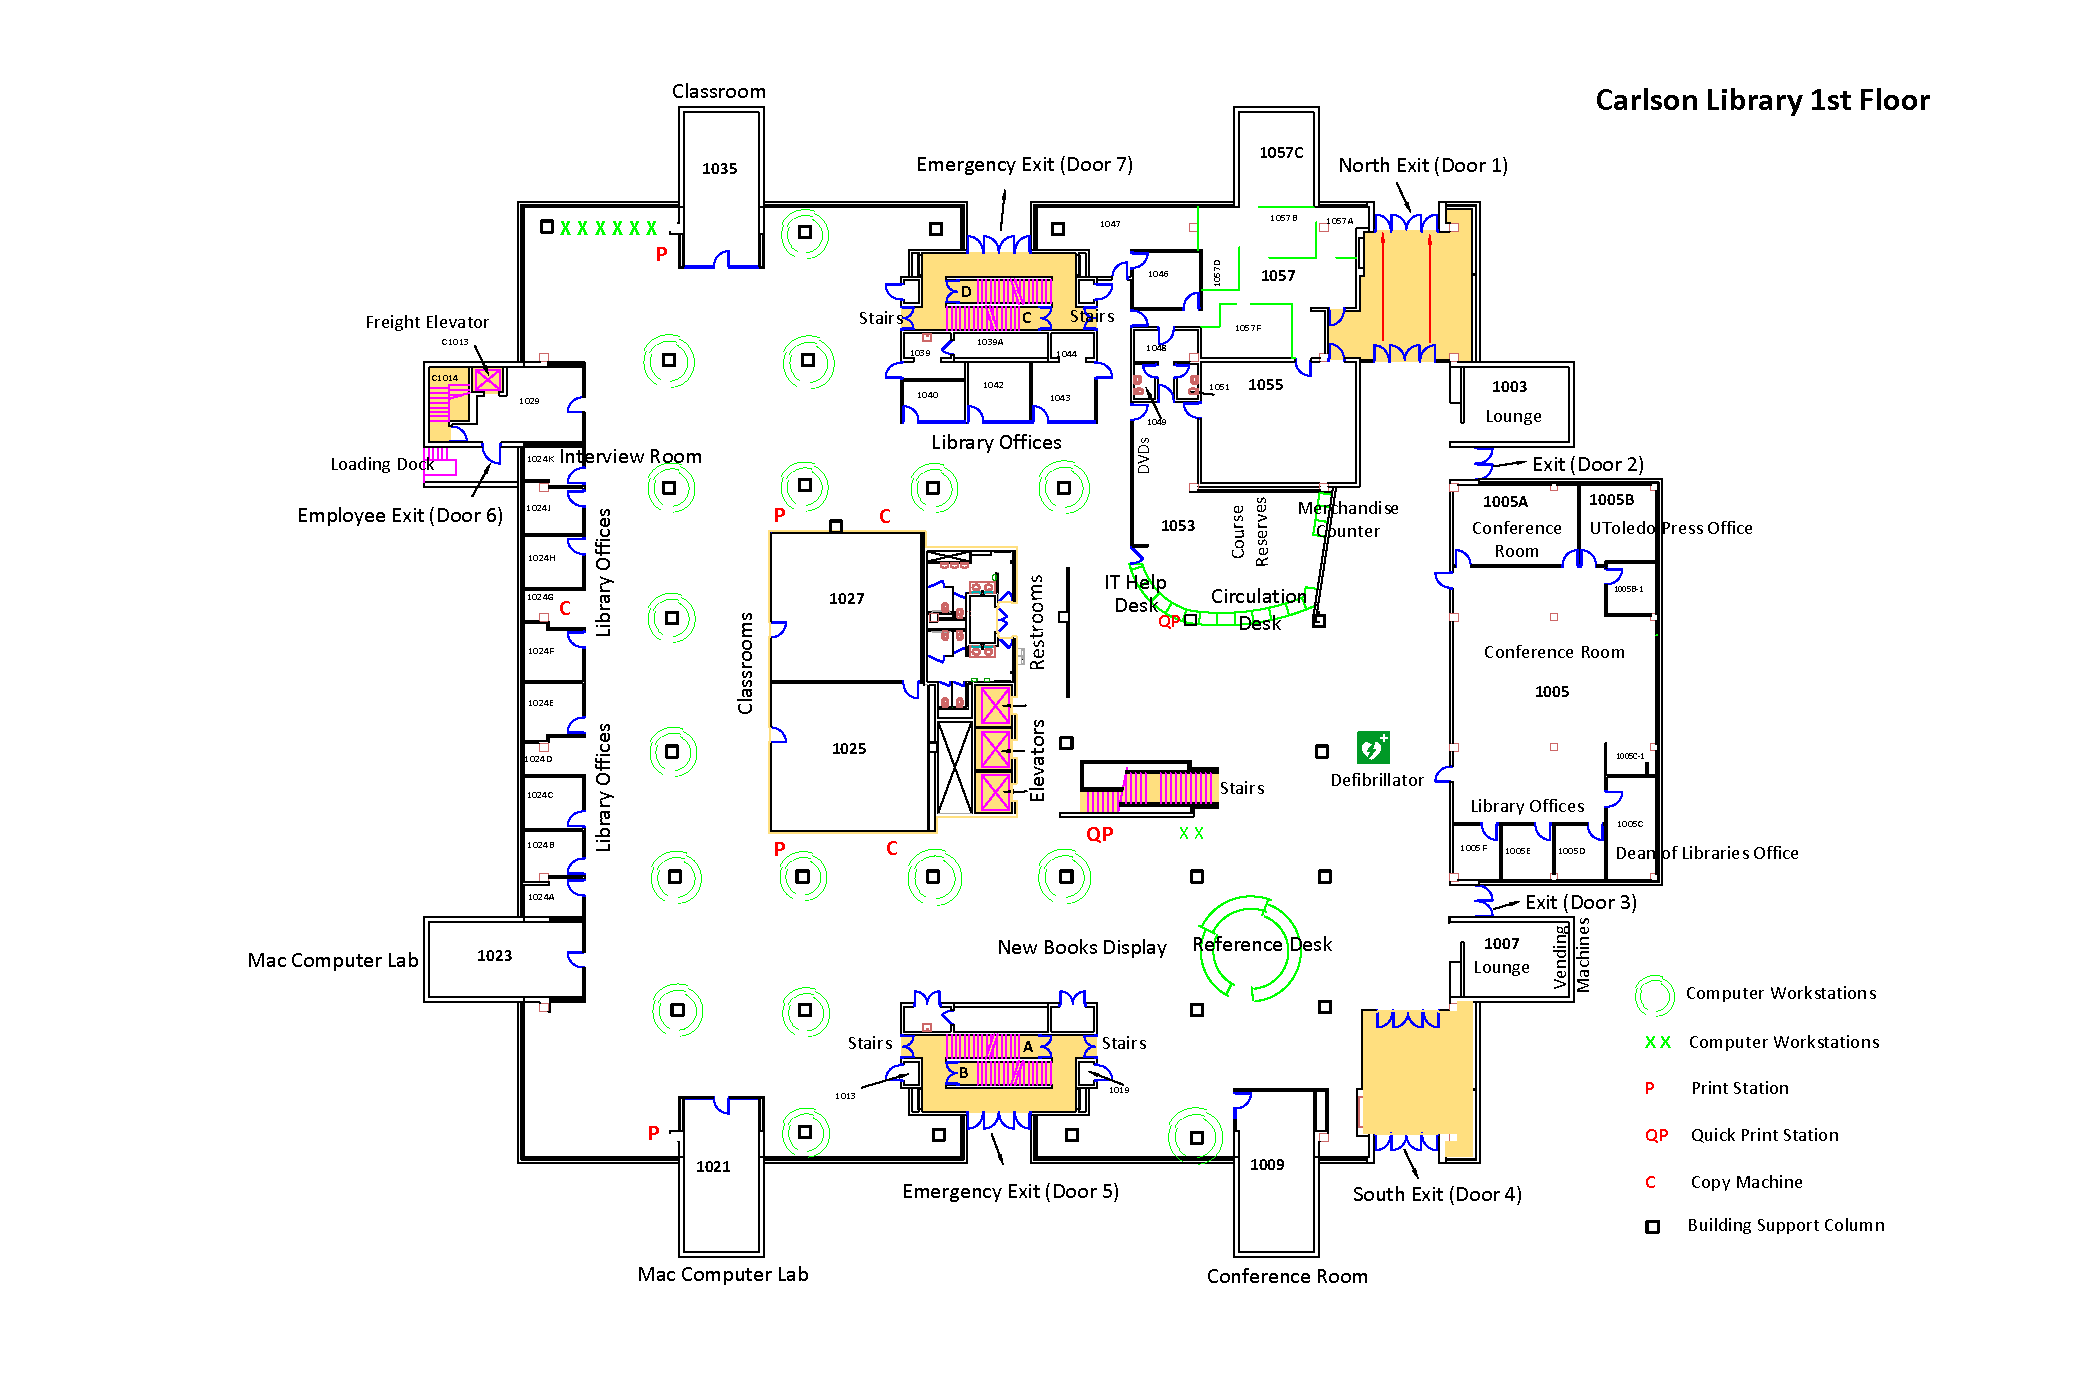 Carlson Library Floorplans